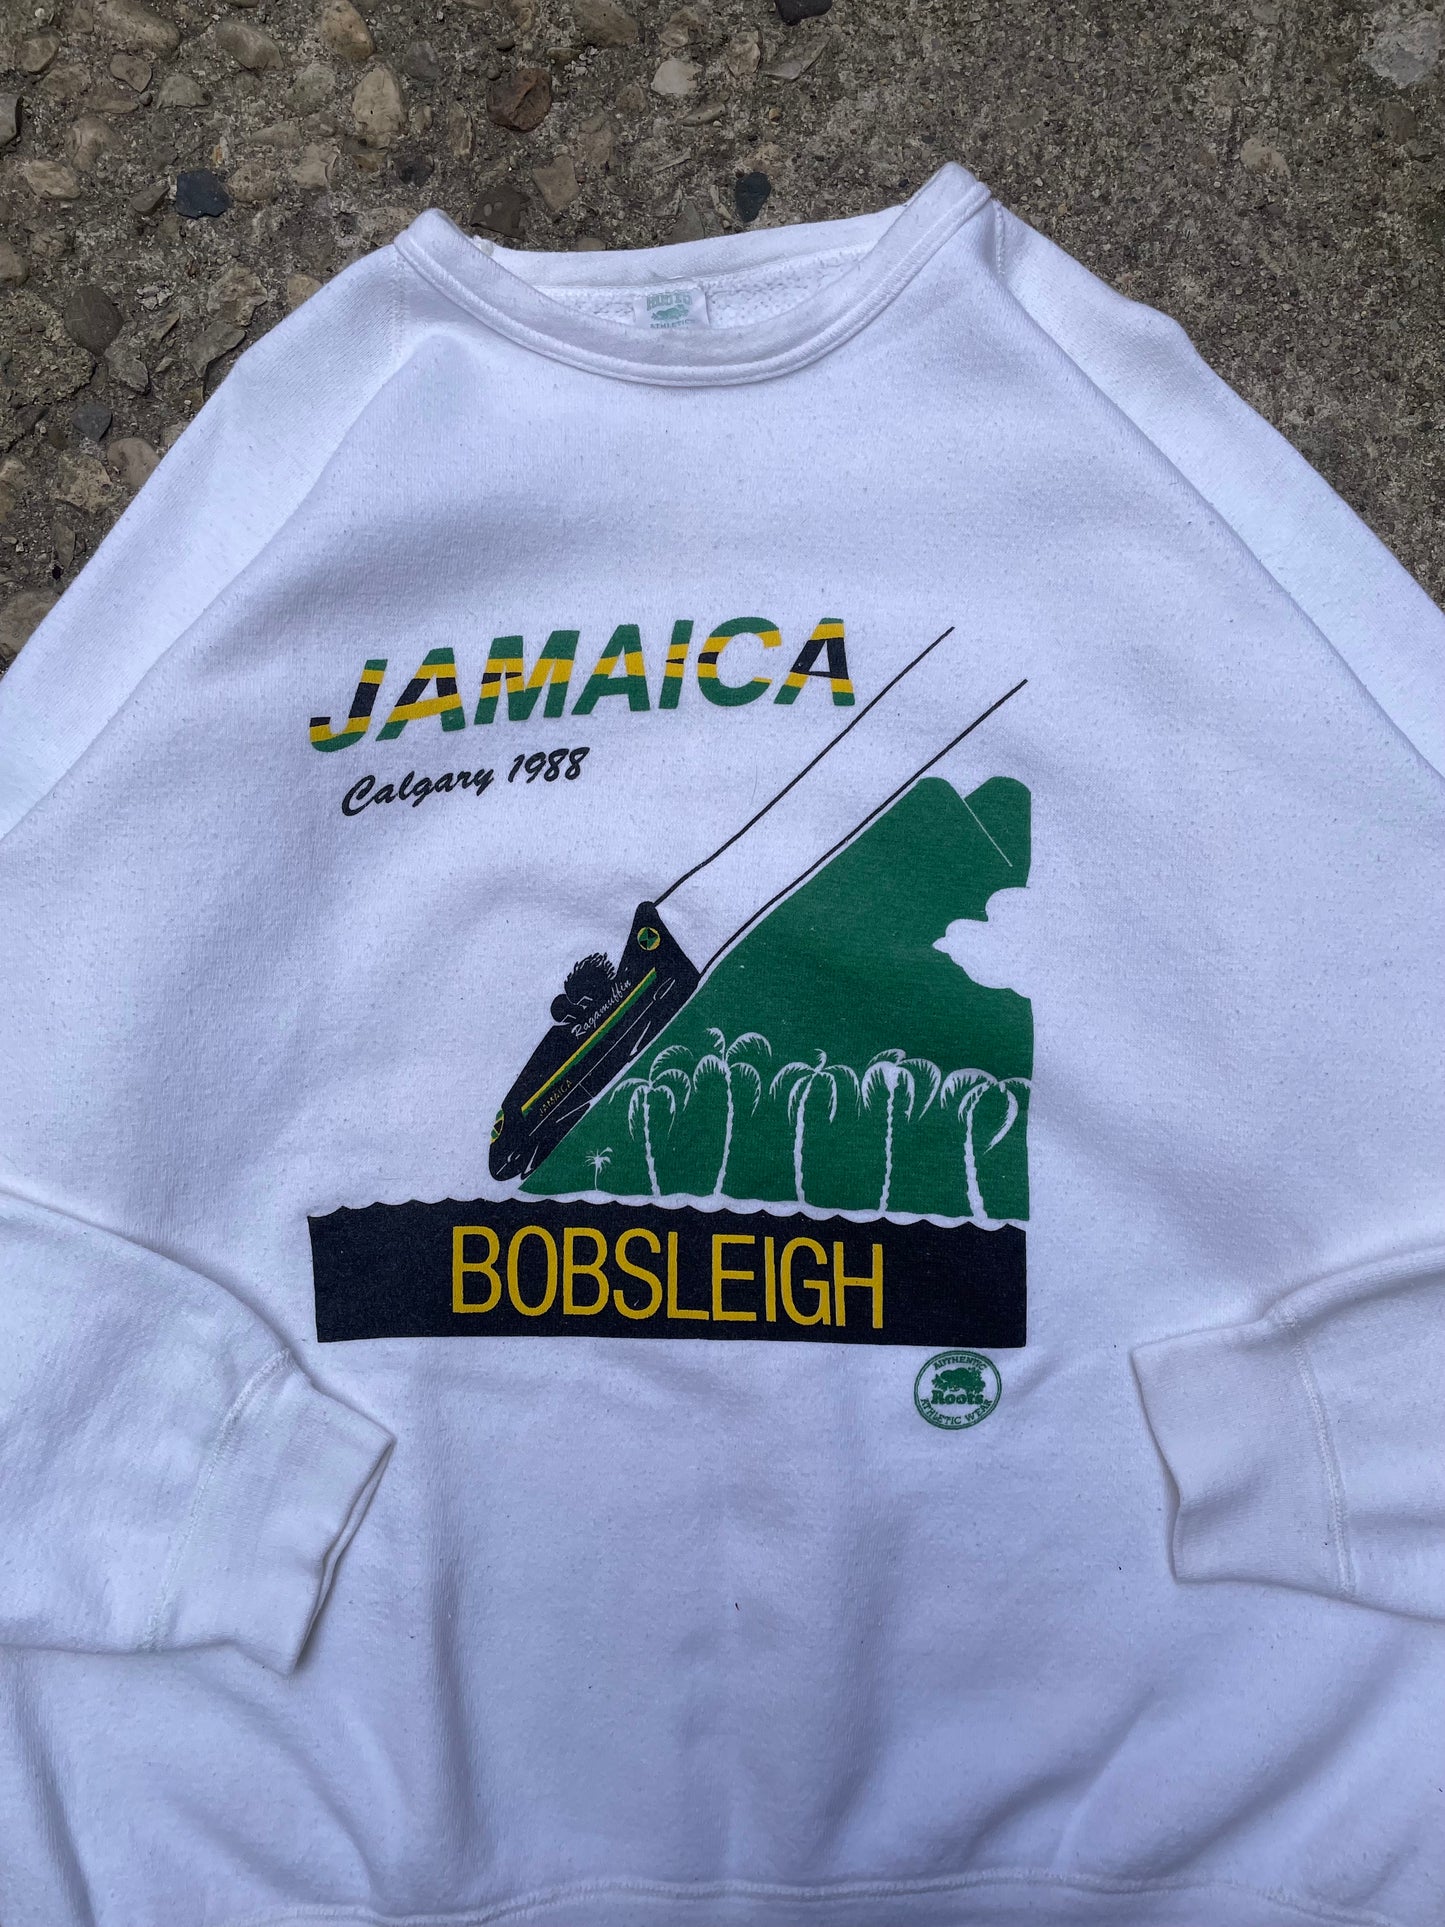 1988 Roots Jamaican Bobsled Team Graphic Crewneck Sweatshirt - XL